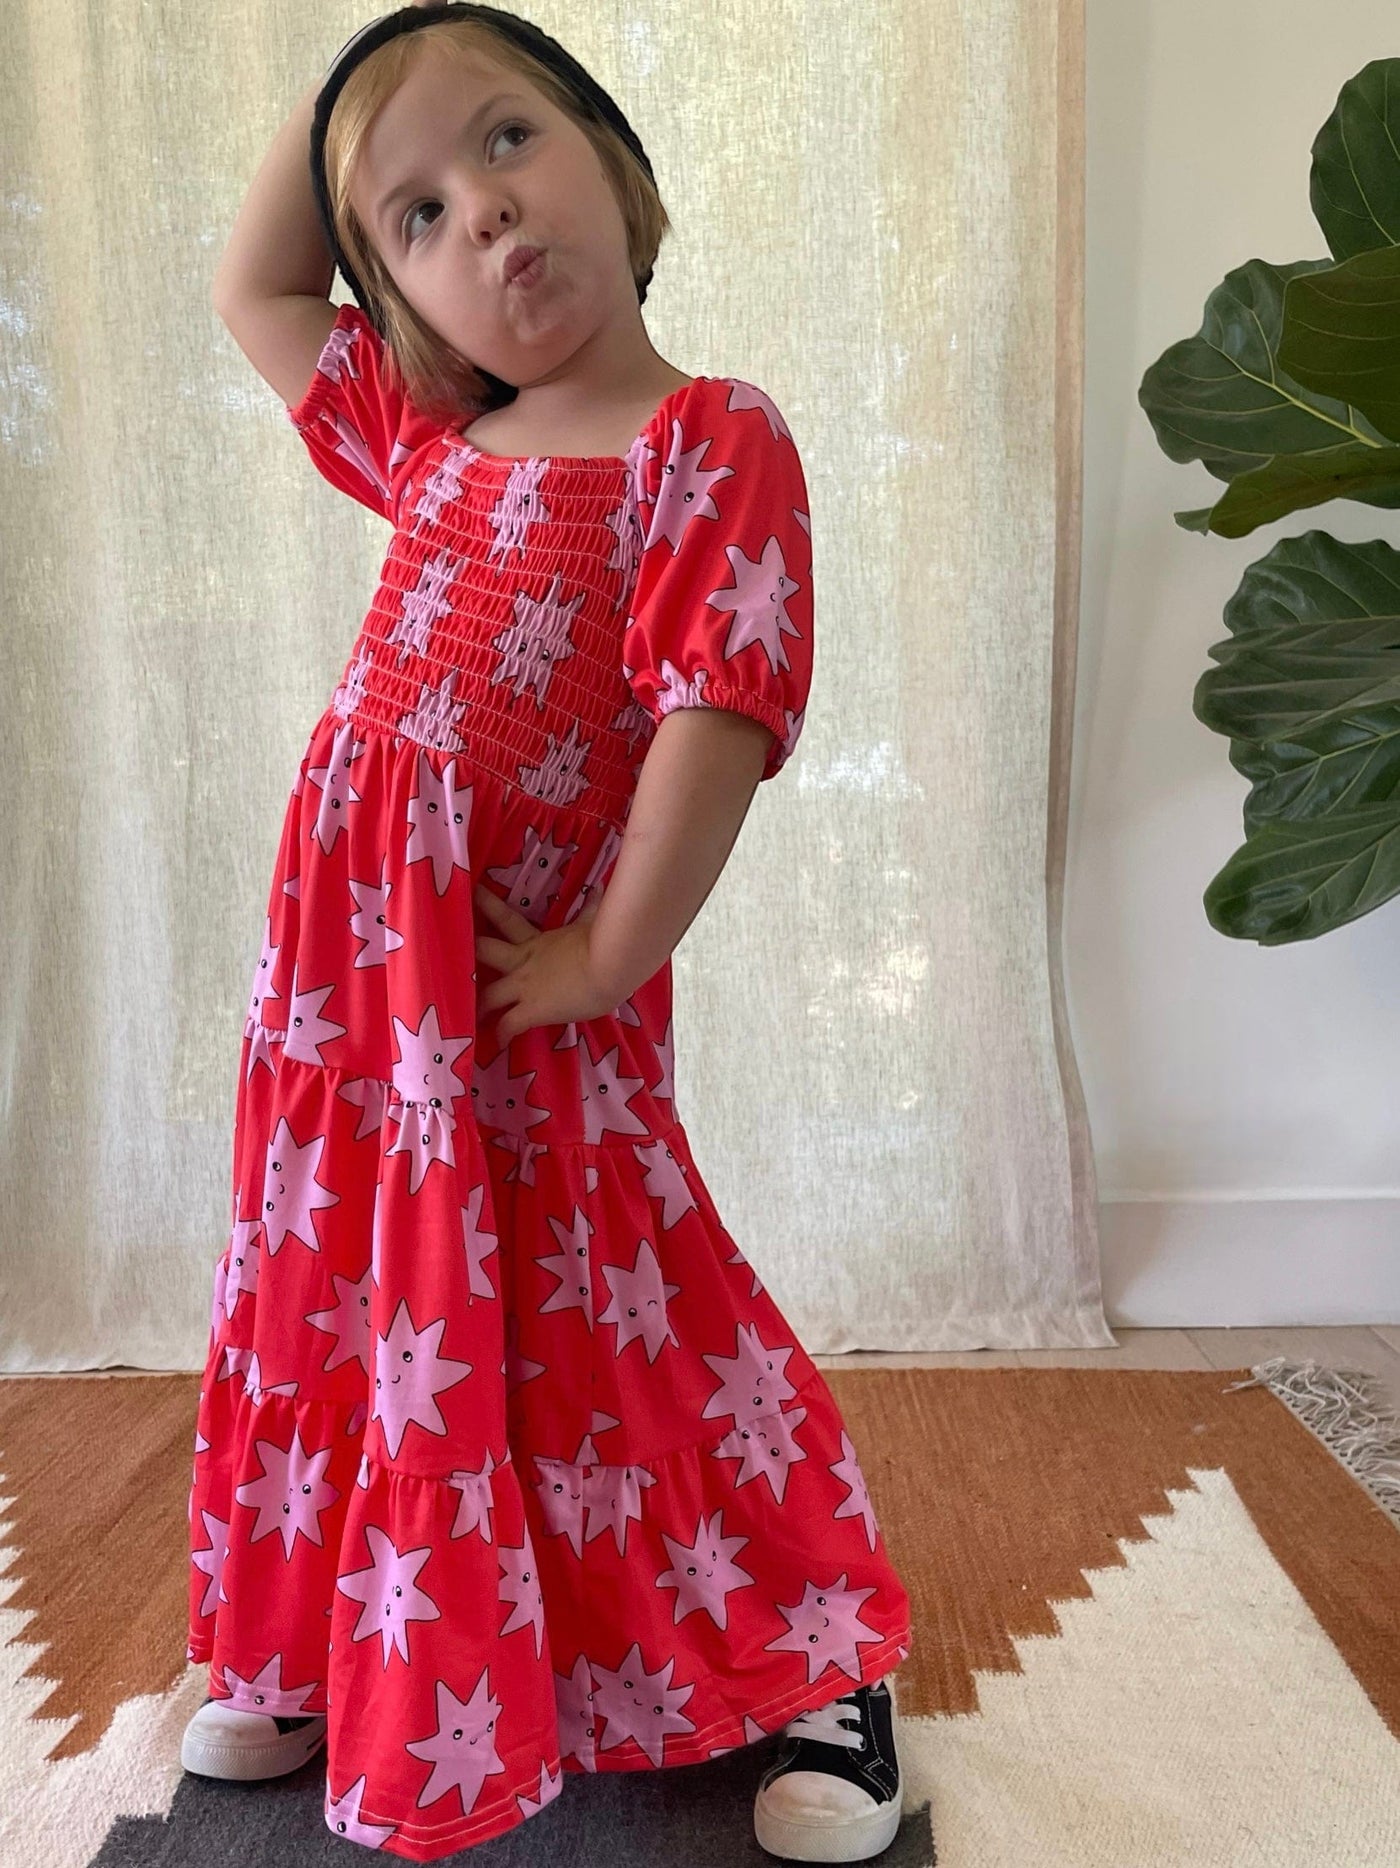 Best Day Ever Kids Baby & Toddler Dresses Super Star Smocked Maxi Dress buy online boutique kids clothing